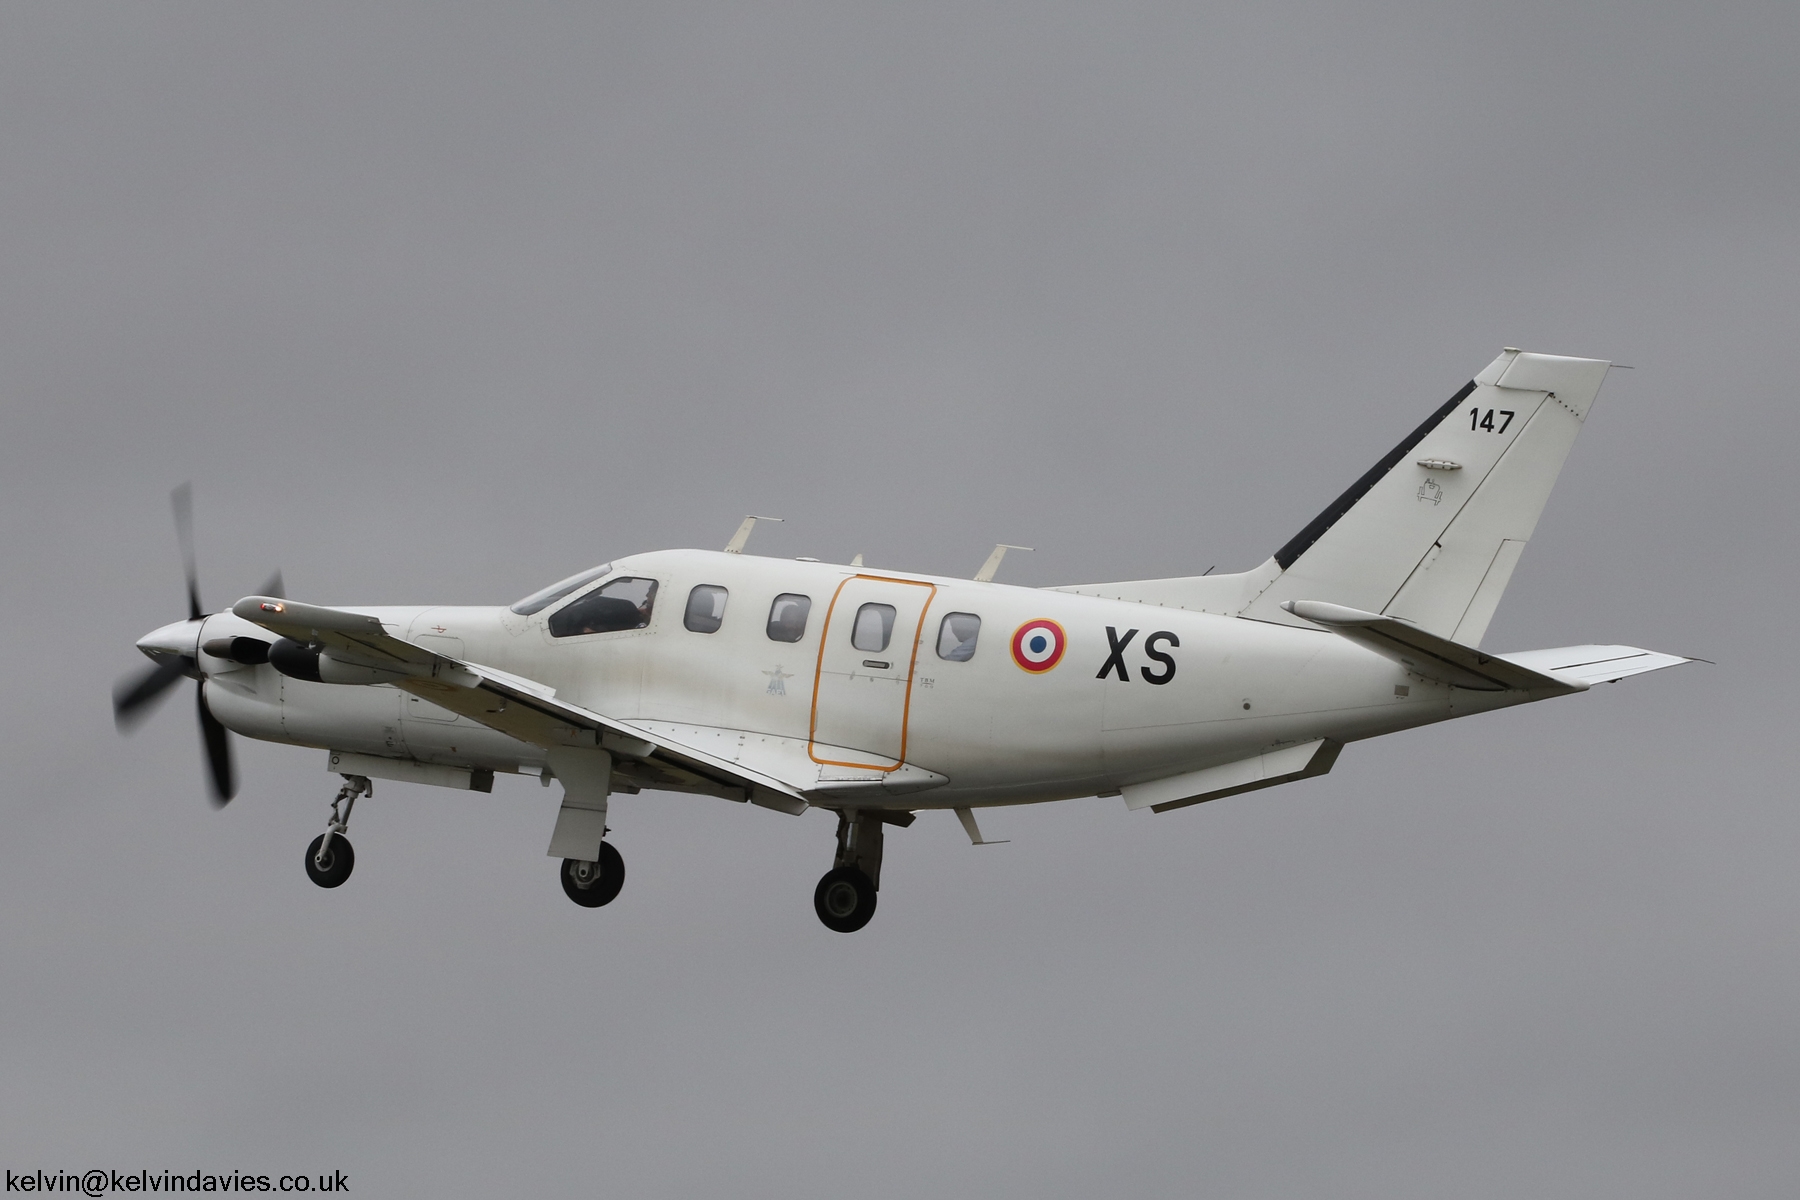 French Air Force Socata TBM700 147/XS